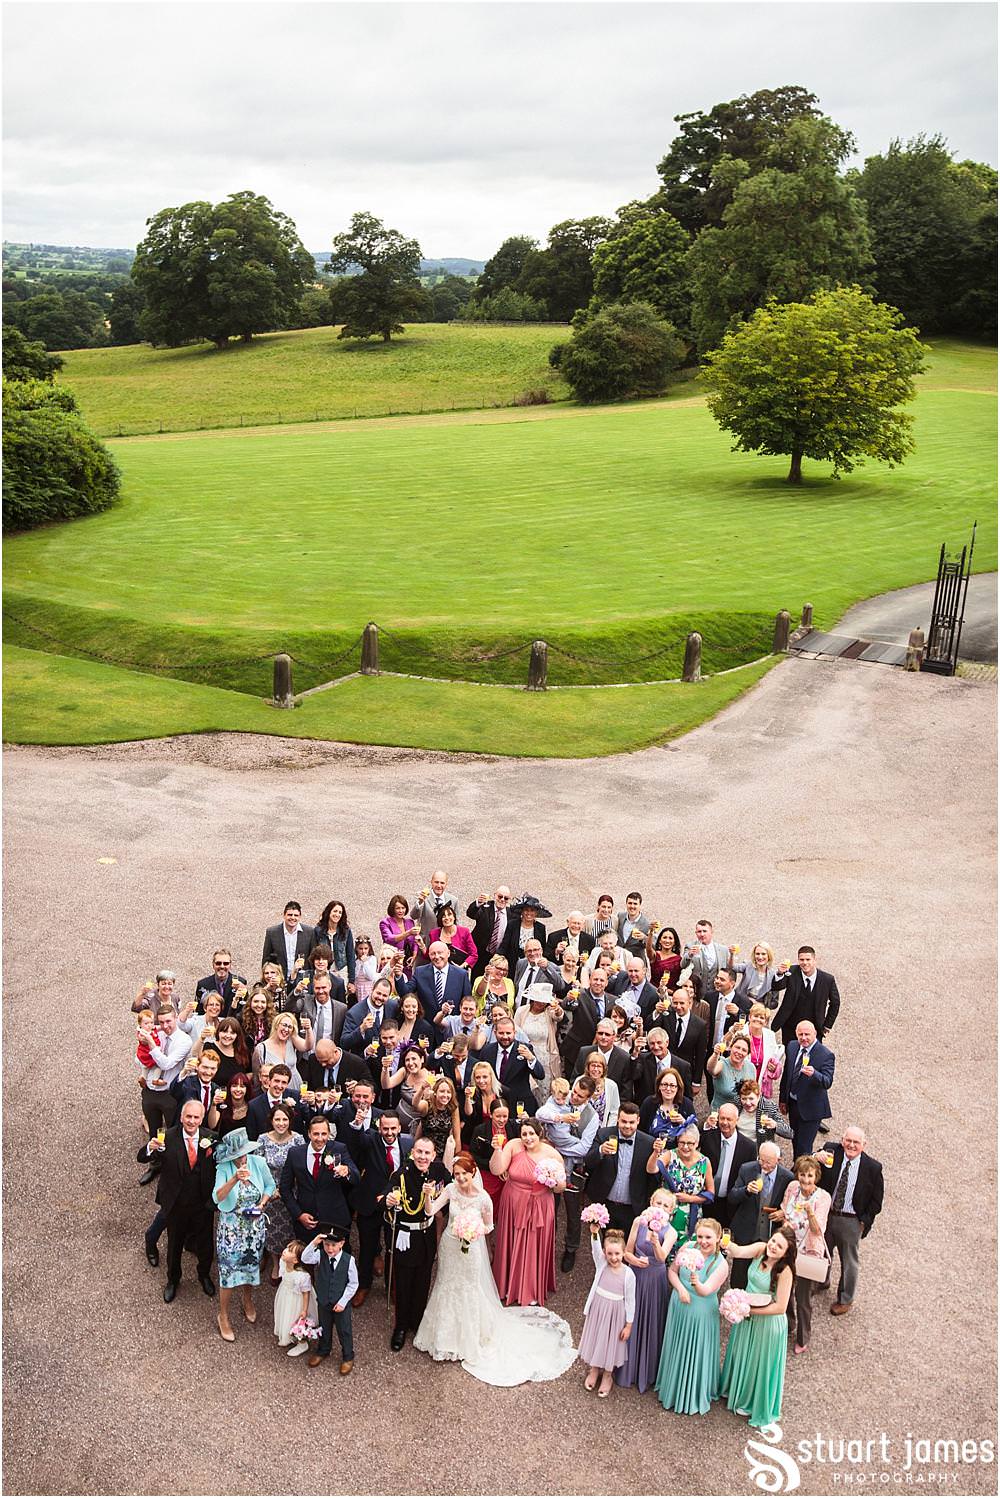 Wedding group photograph at Sandon in Staffordshire by Documentary Wedding Photographer Stuart James